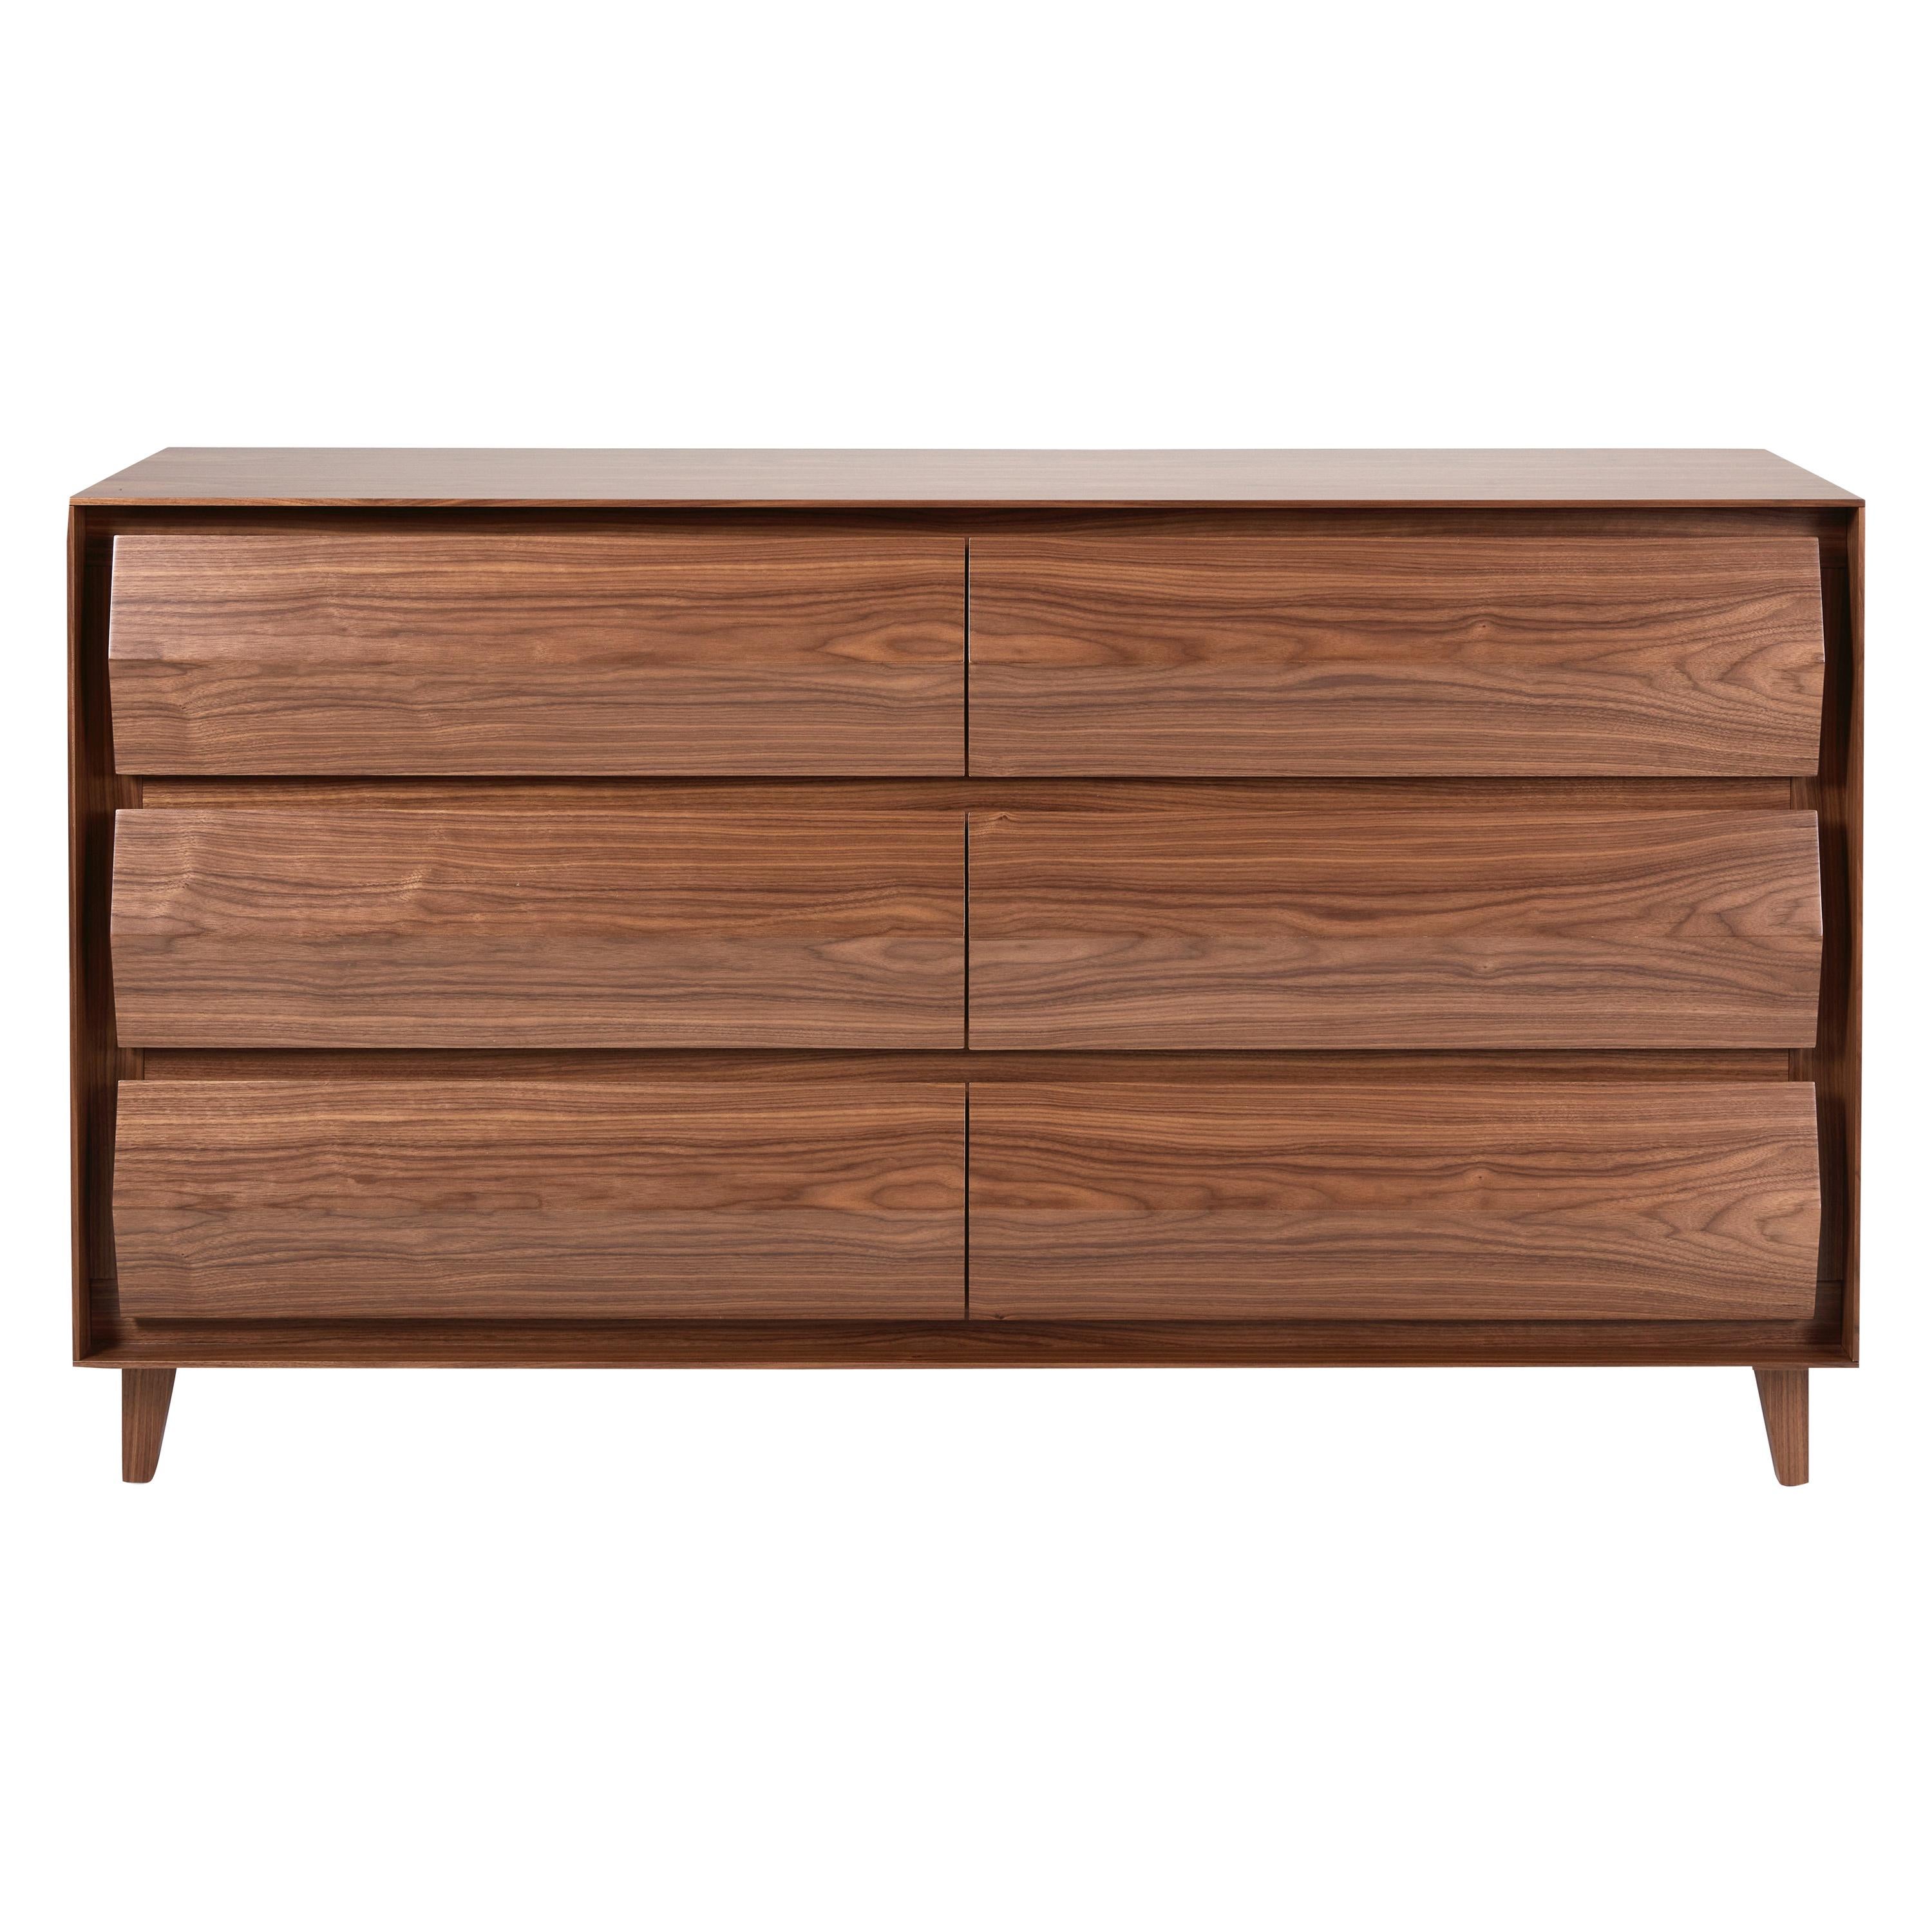 Park Dresser, Solid Walnut Wood Dresser with 6 Large Drawers For Sale